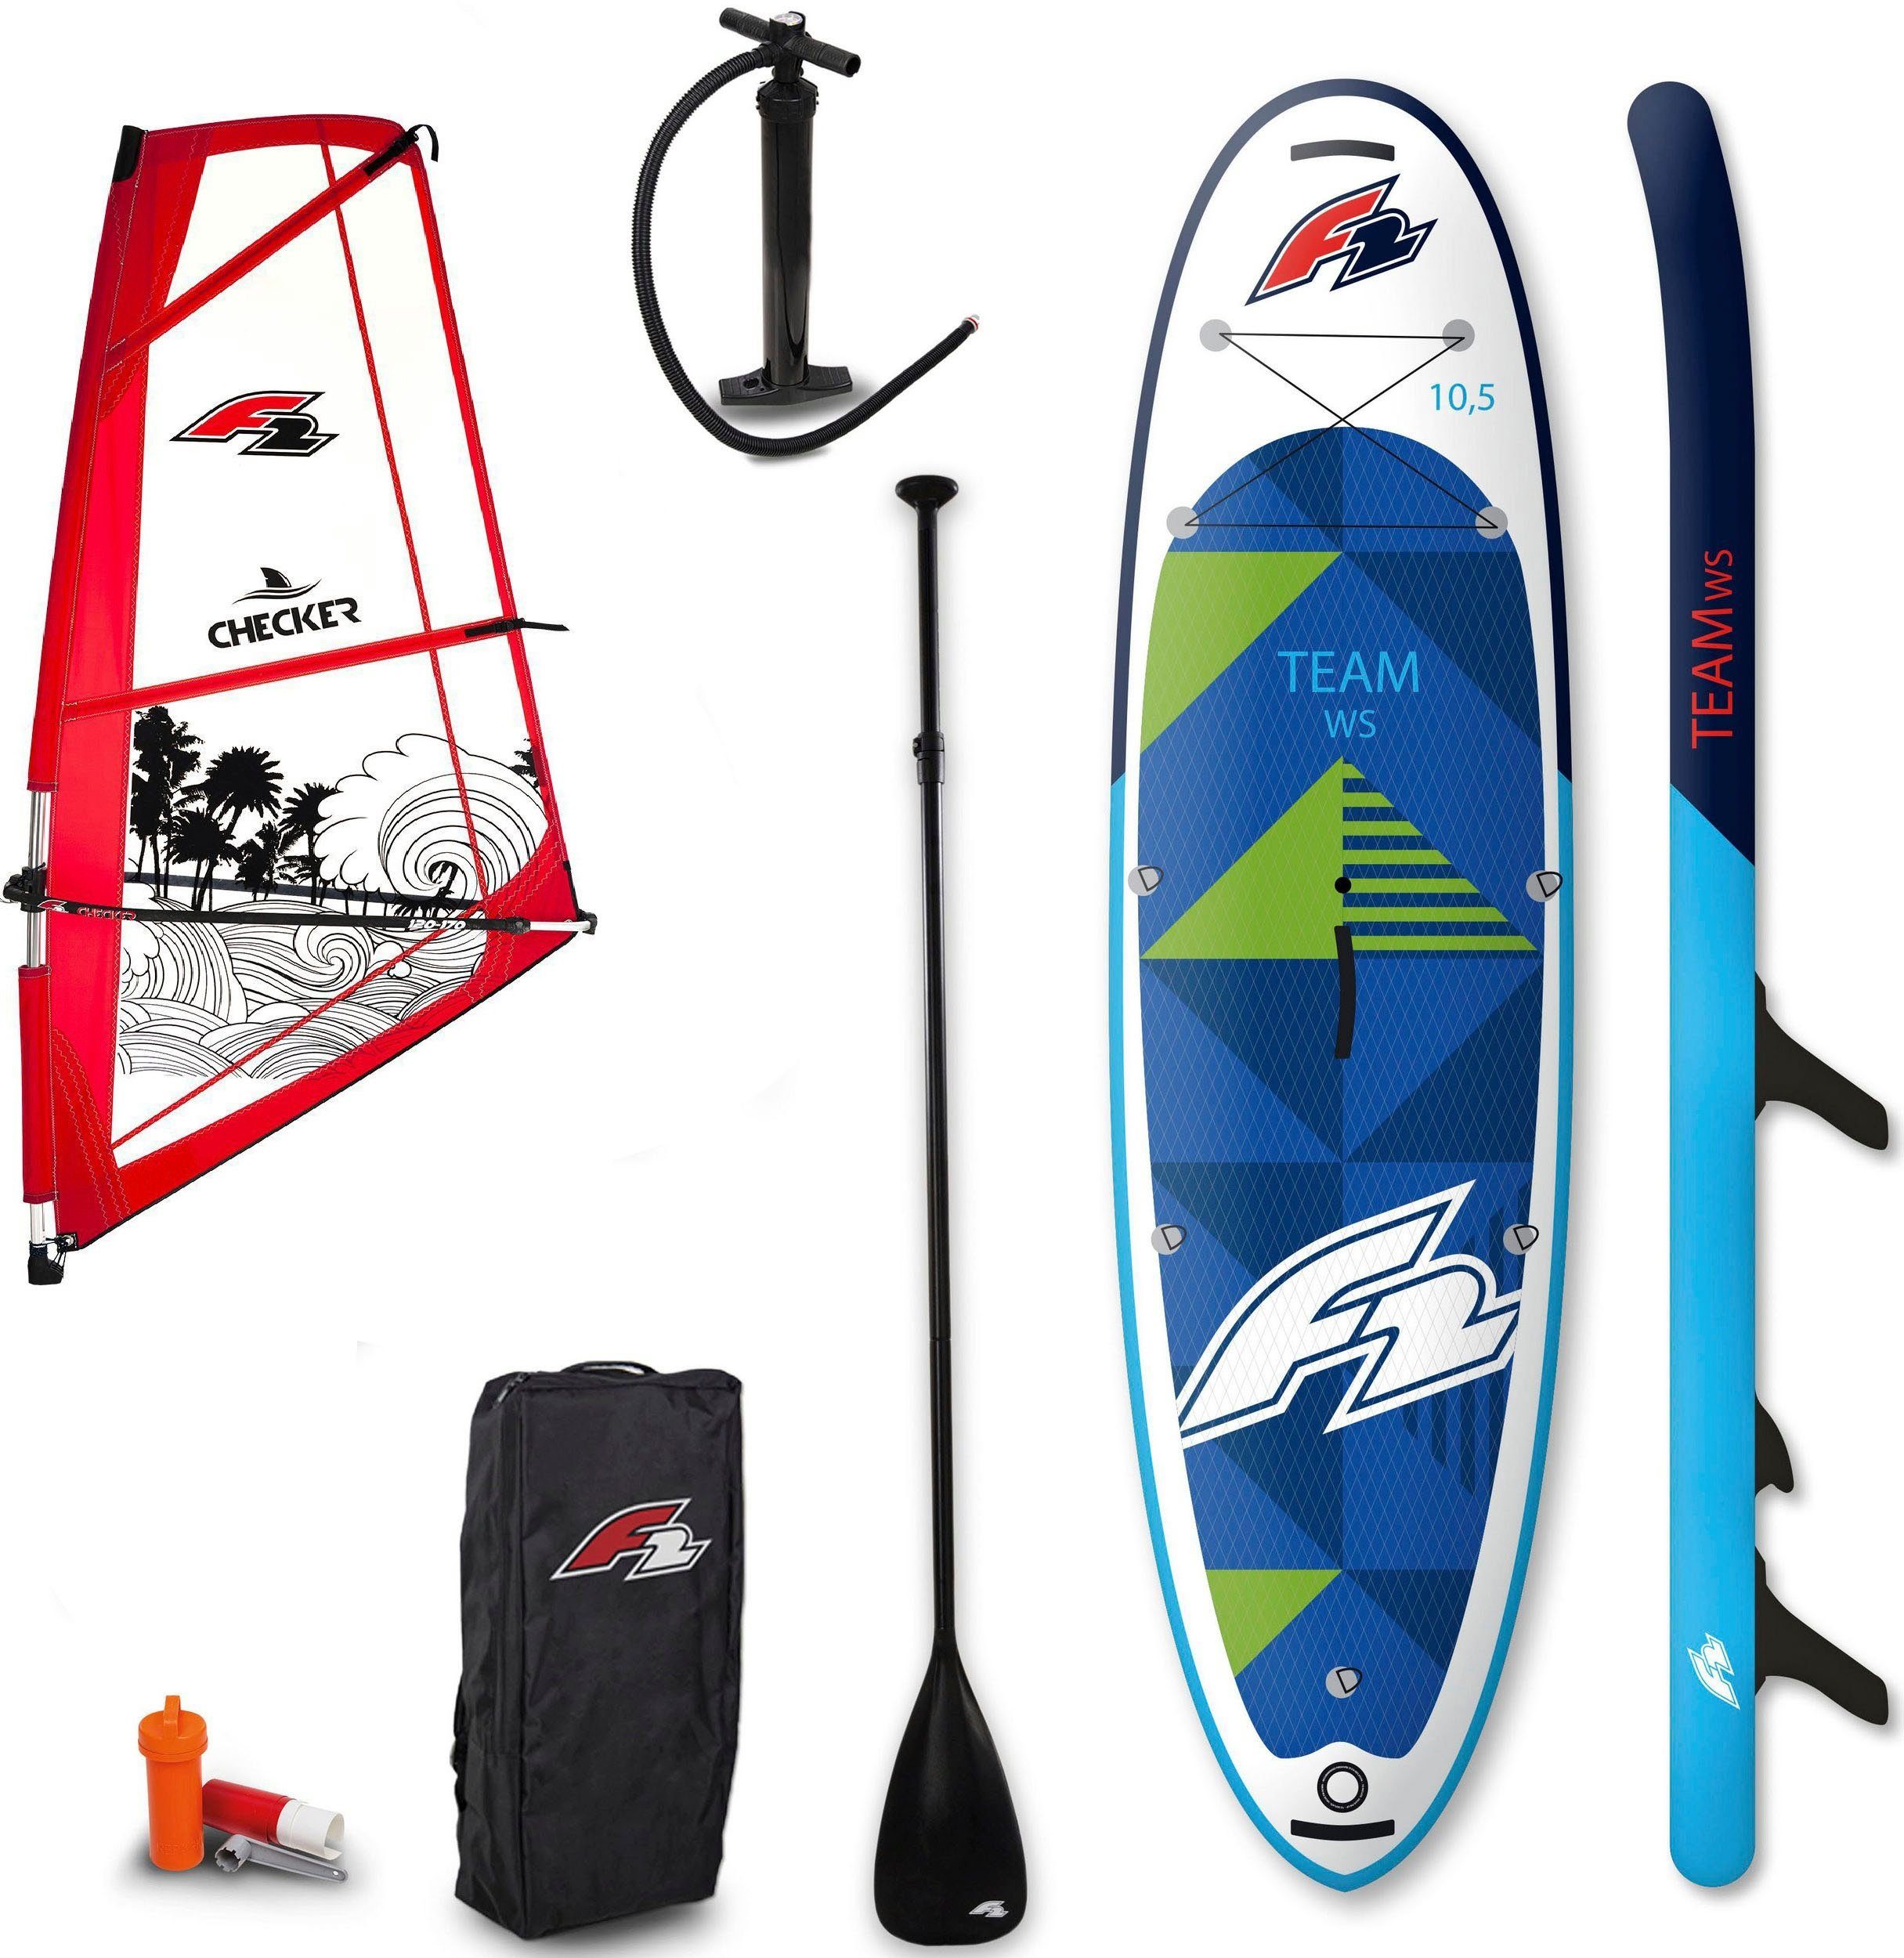 F2 Windsurfboard Team WS 10,5 Set mit Checker Rigg 4,5m², (Set, 16 tlg., mit Paddel, Pumpe, Transportrucksack und Segel) | Windsurfboards